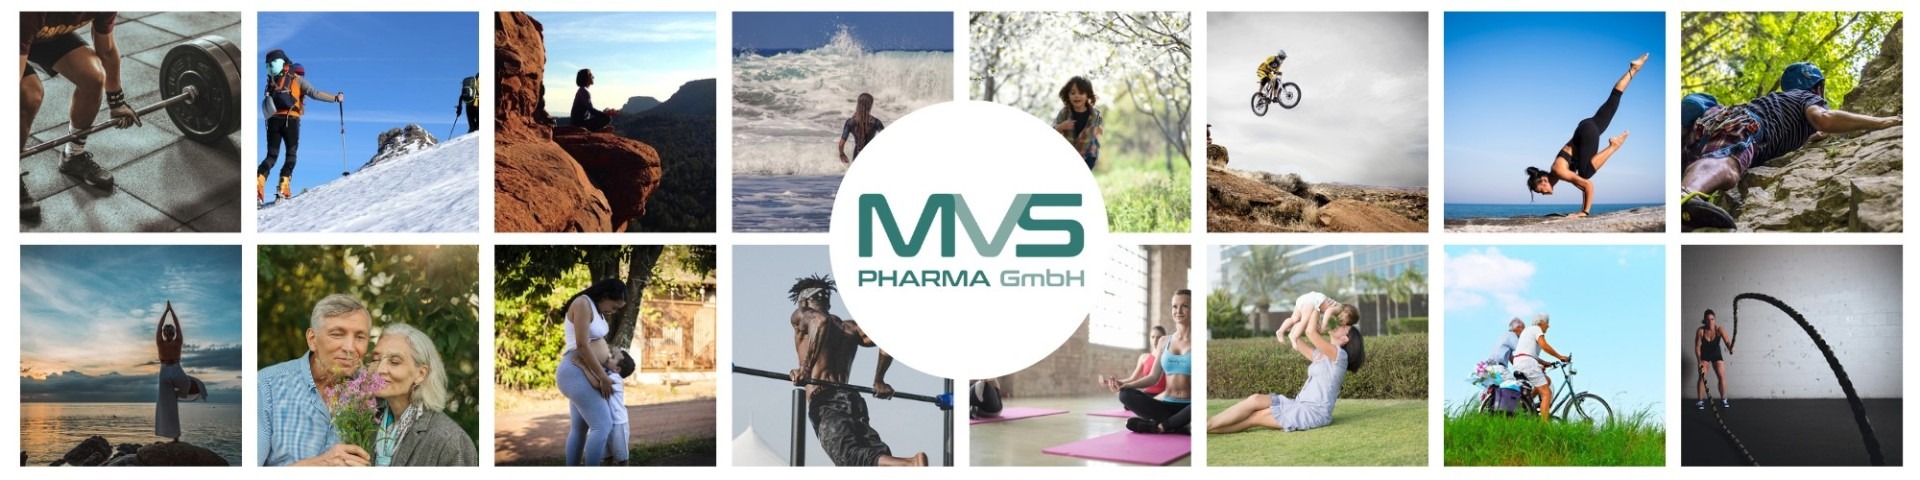 mvs pharma customers wallpaper